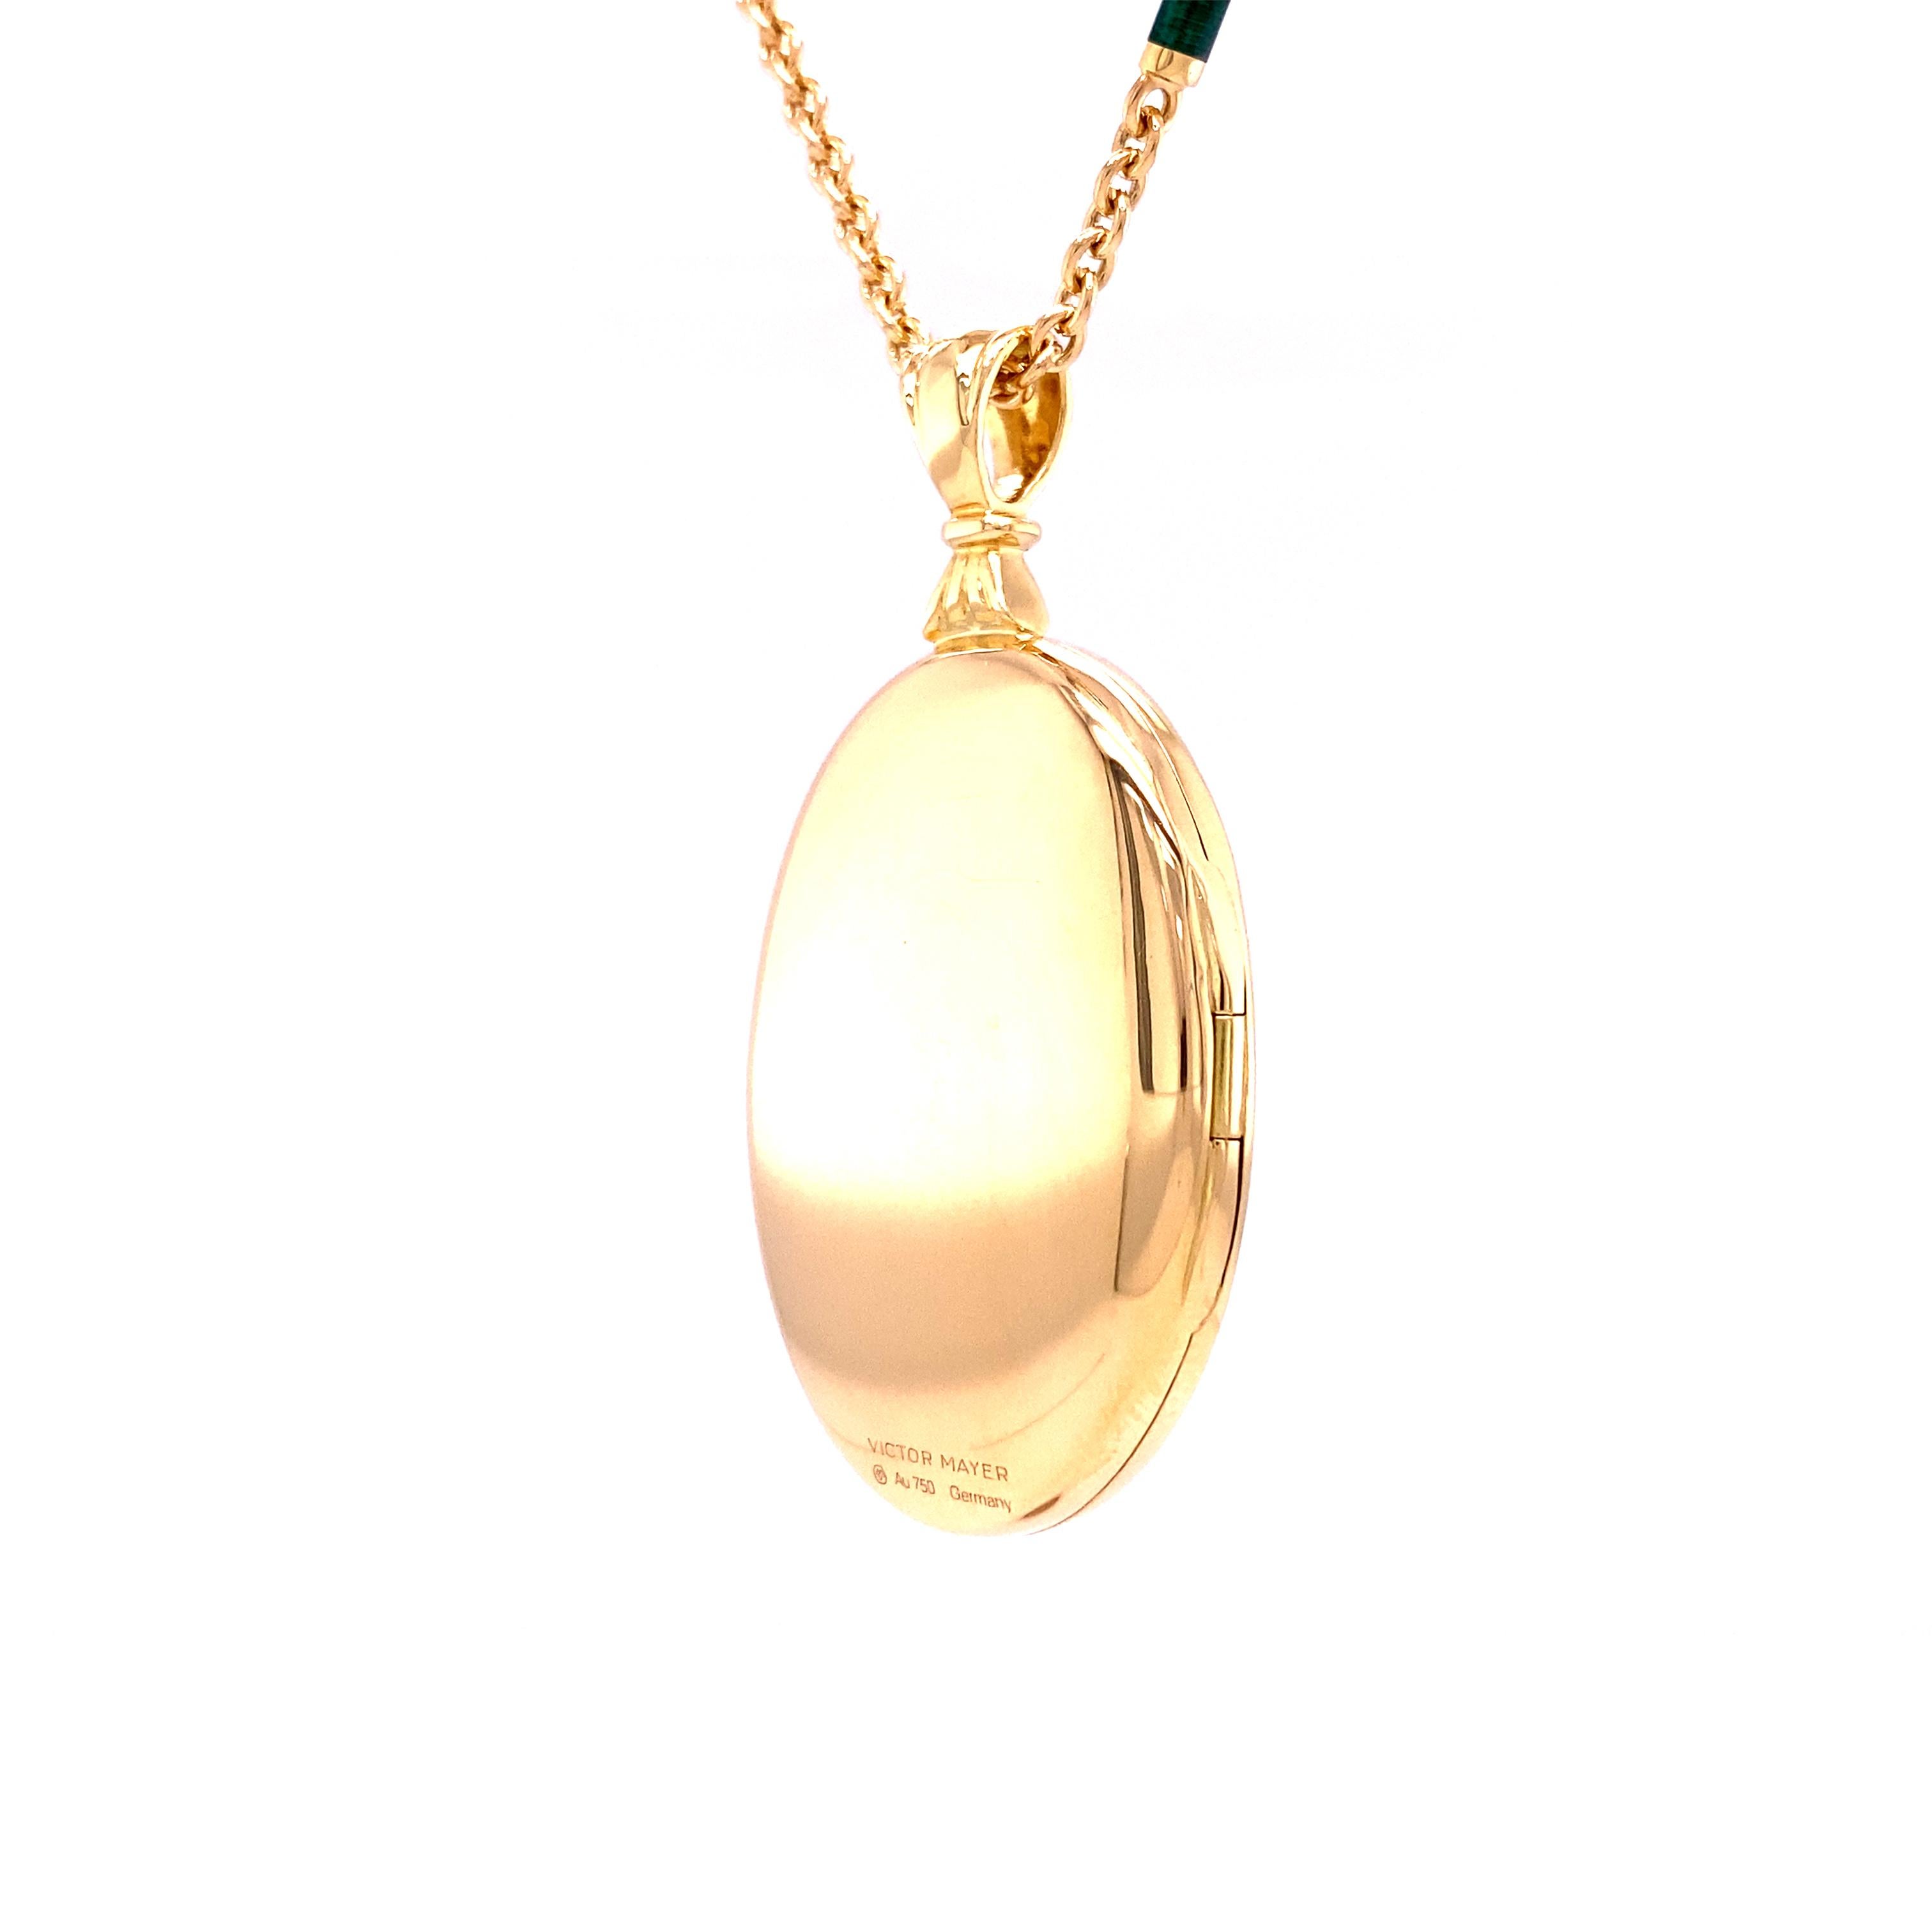 Brilliant Cut Oval Locket Necklace 18k Yellow Gold Green Enamel Guilloche 25 Diamonds 0.29 ct For Sale